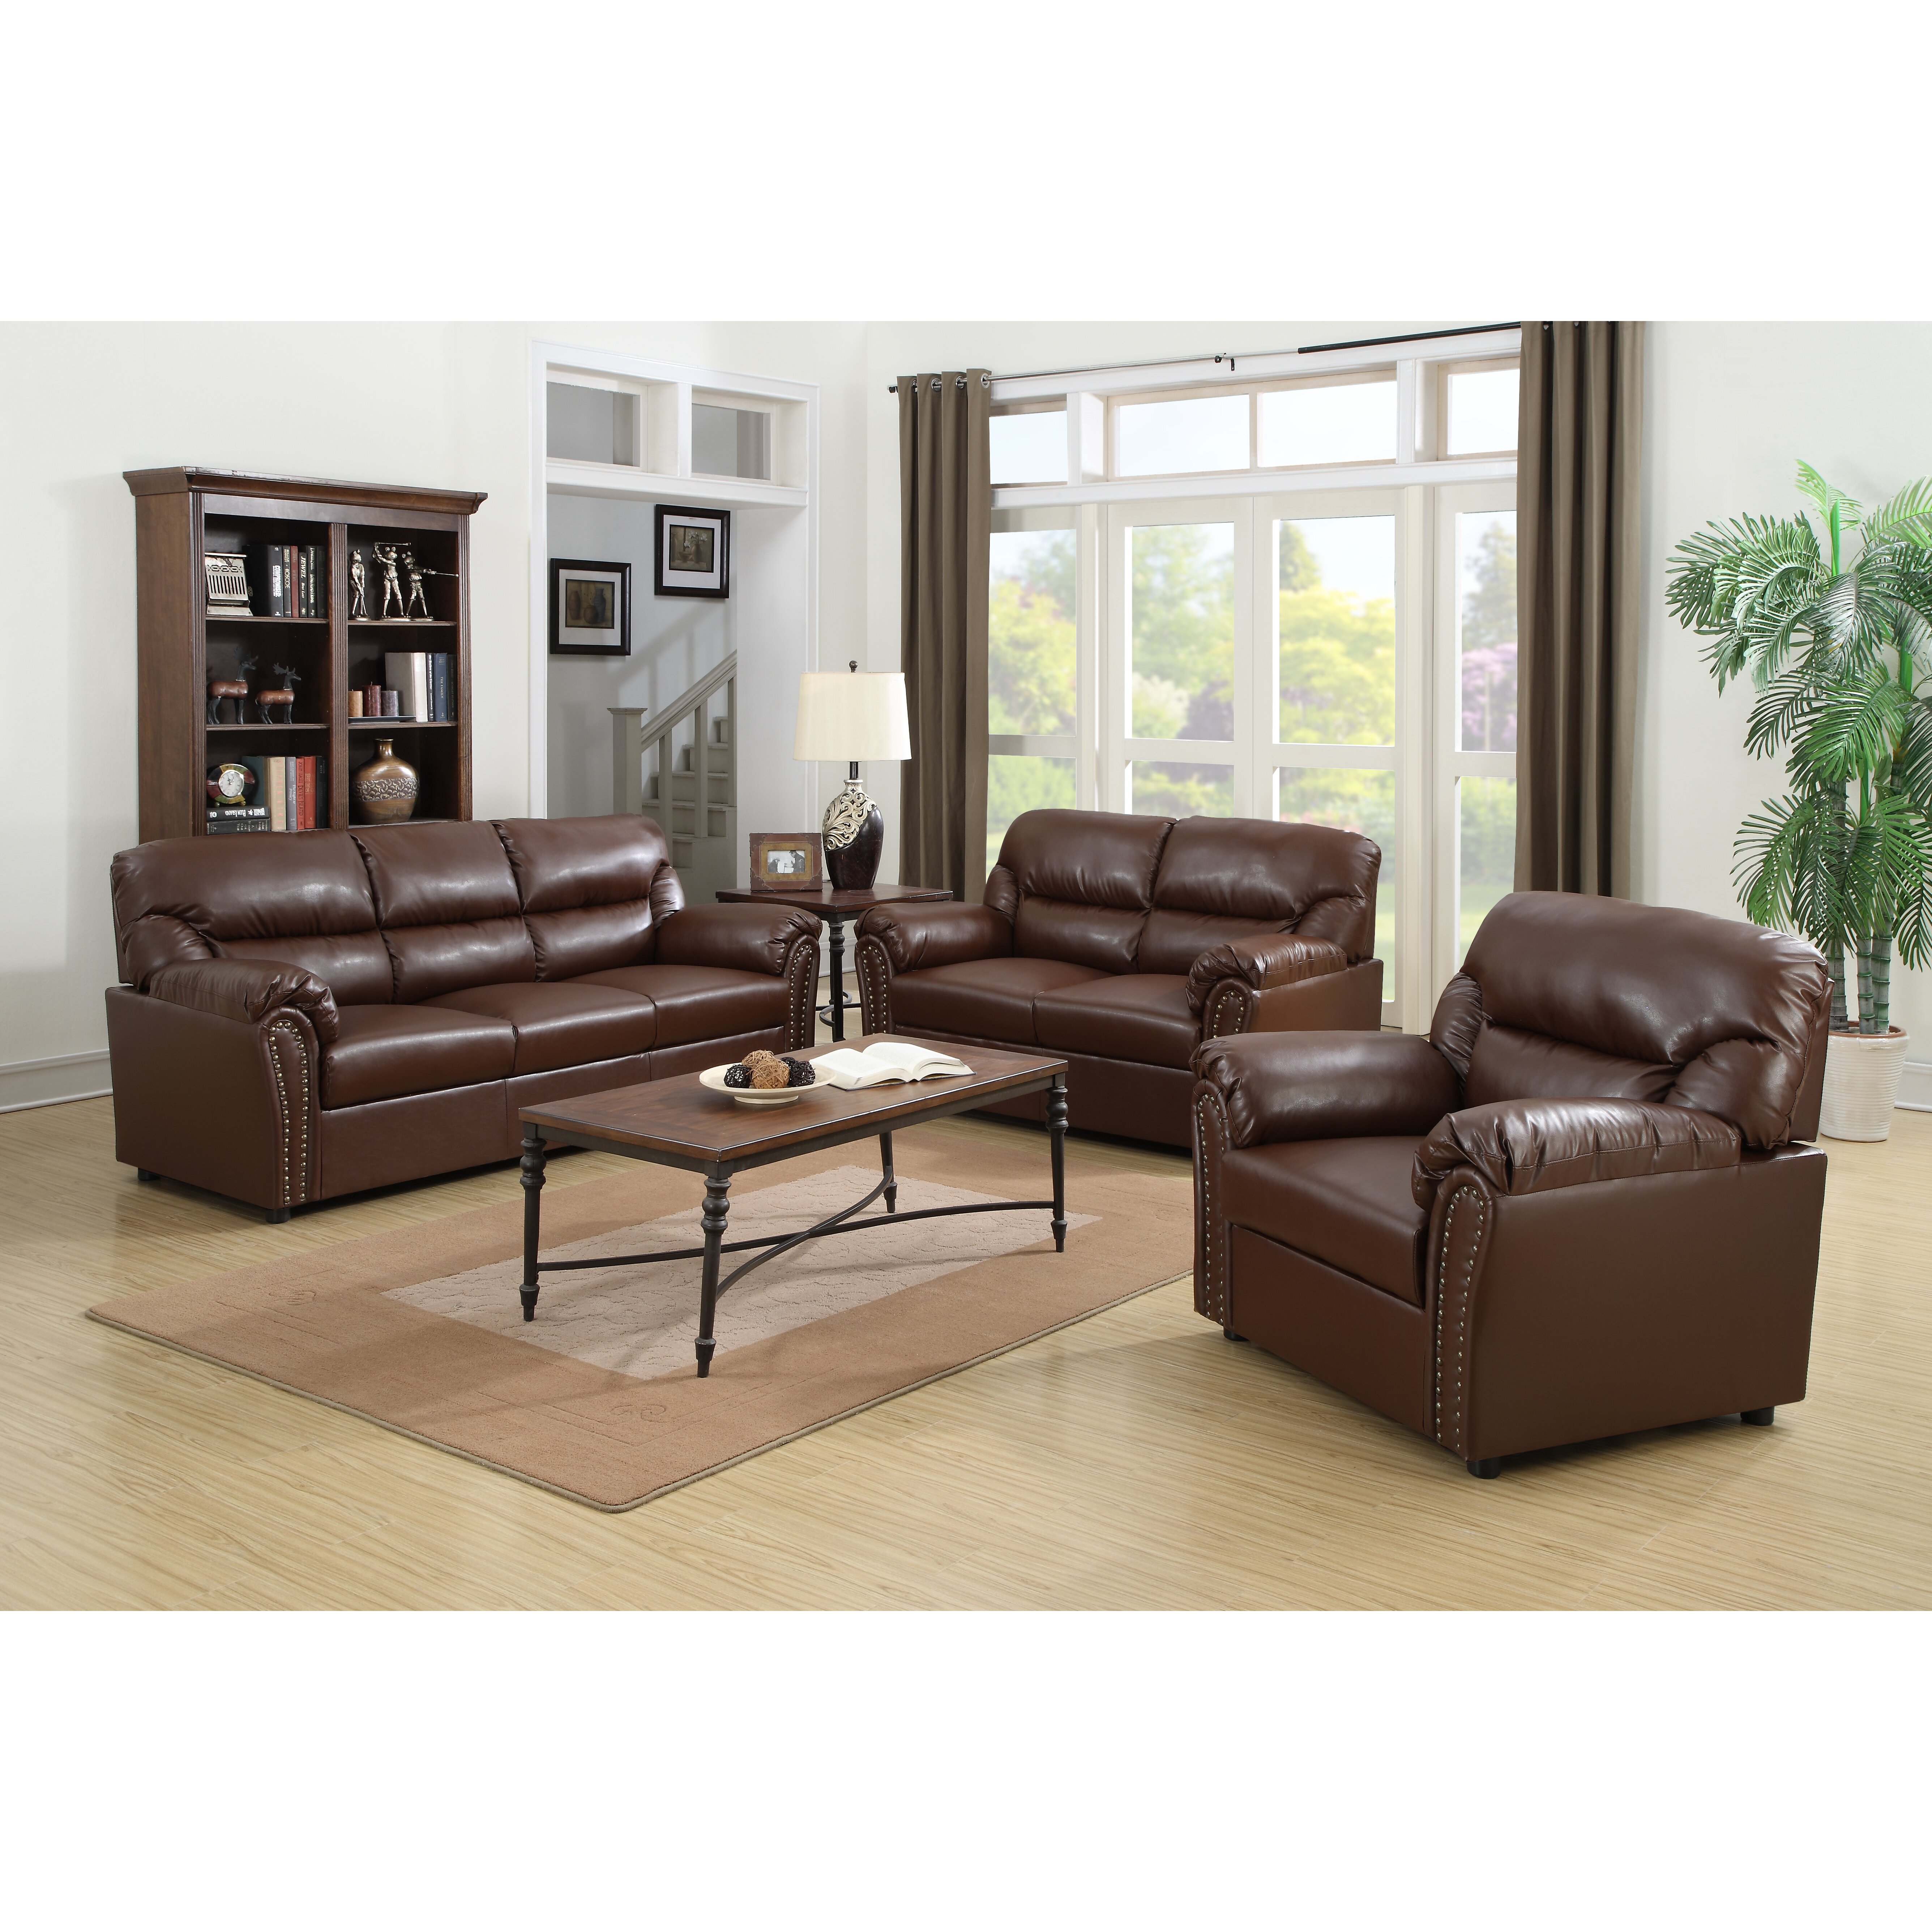  Living Room Furniture Wayfair 